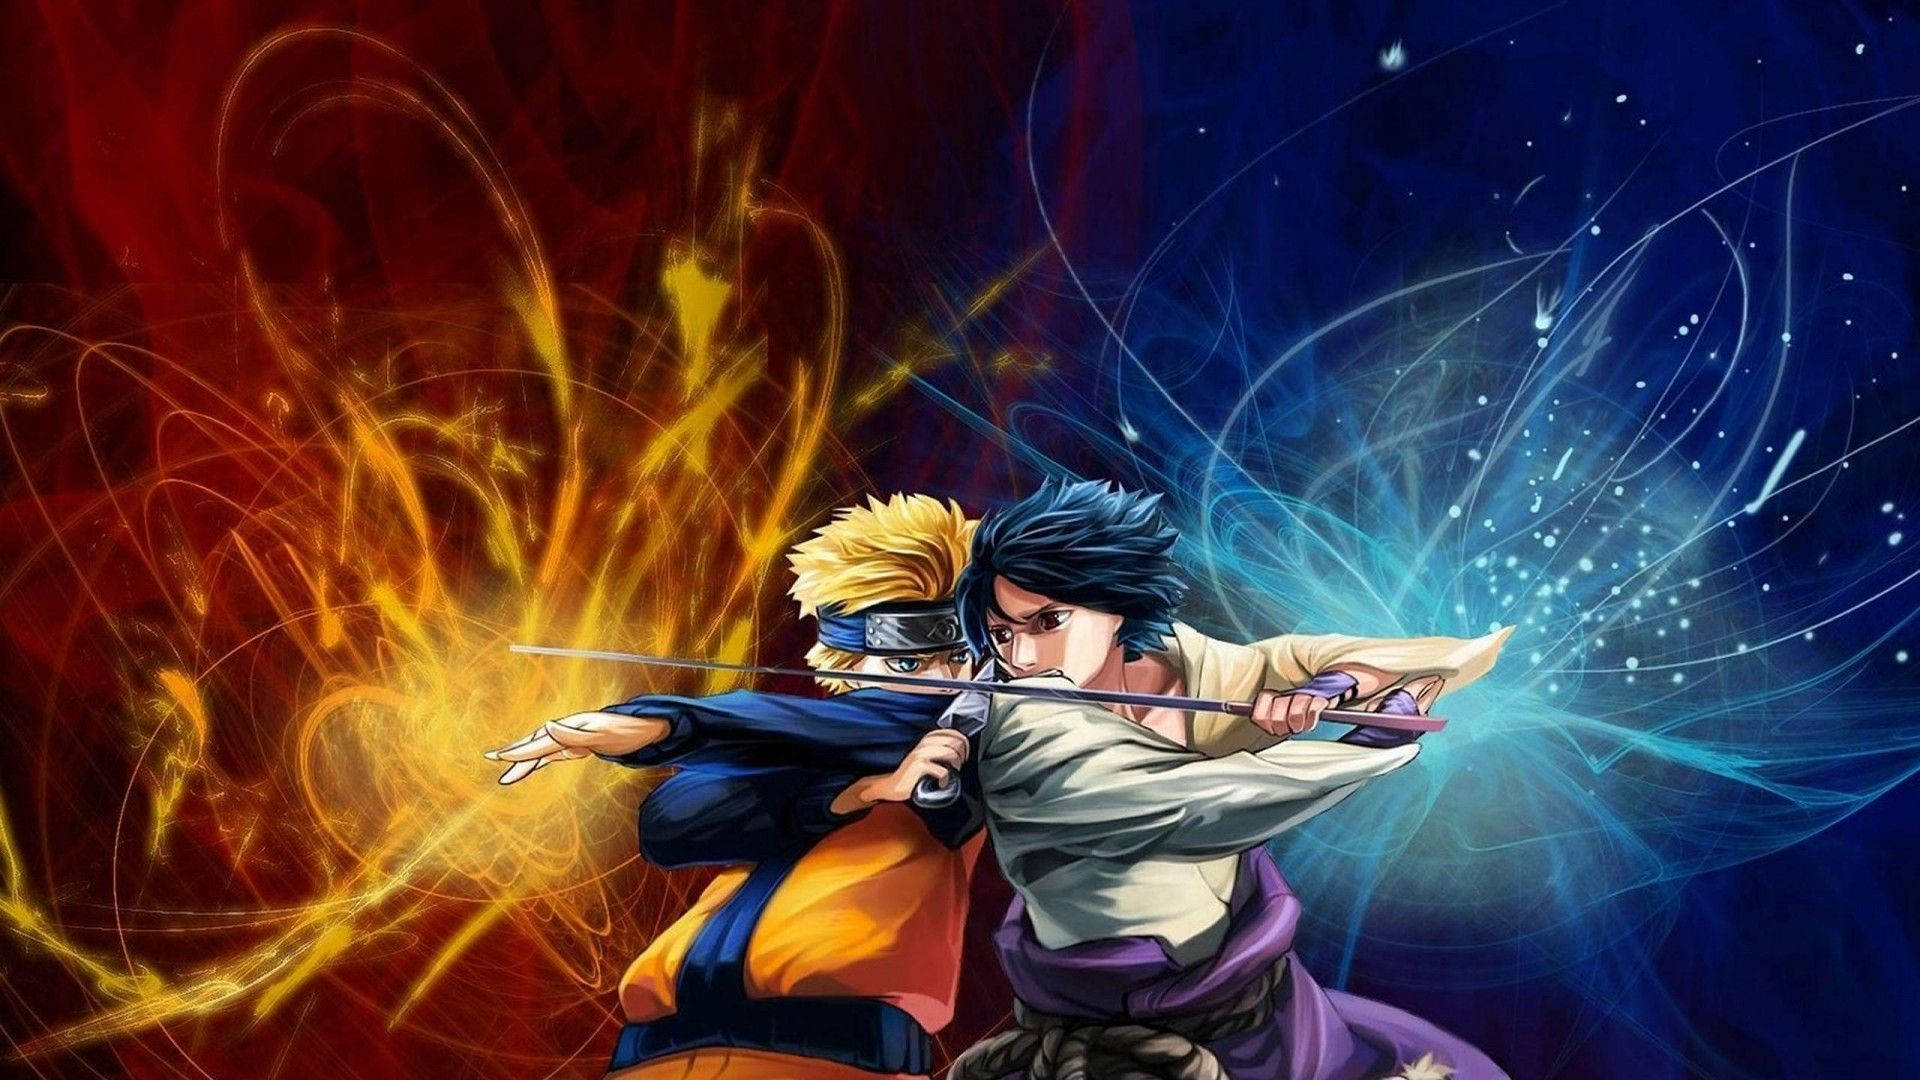 Battle Of Sasuke And Naruto Laptop Wallpaper